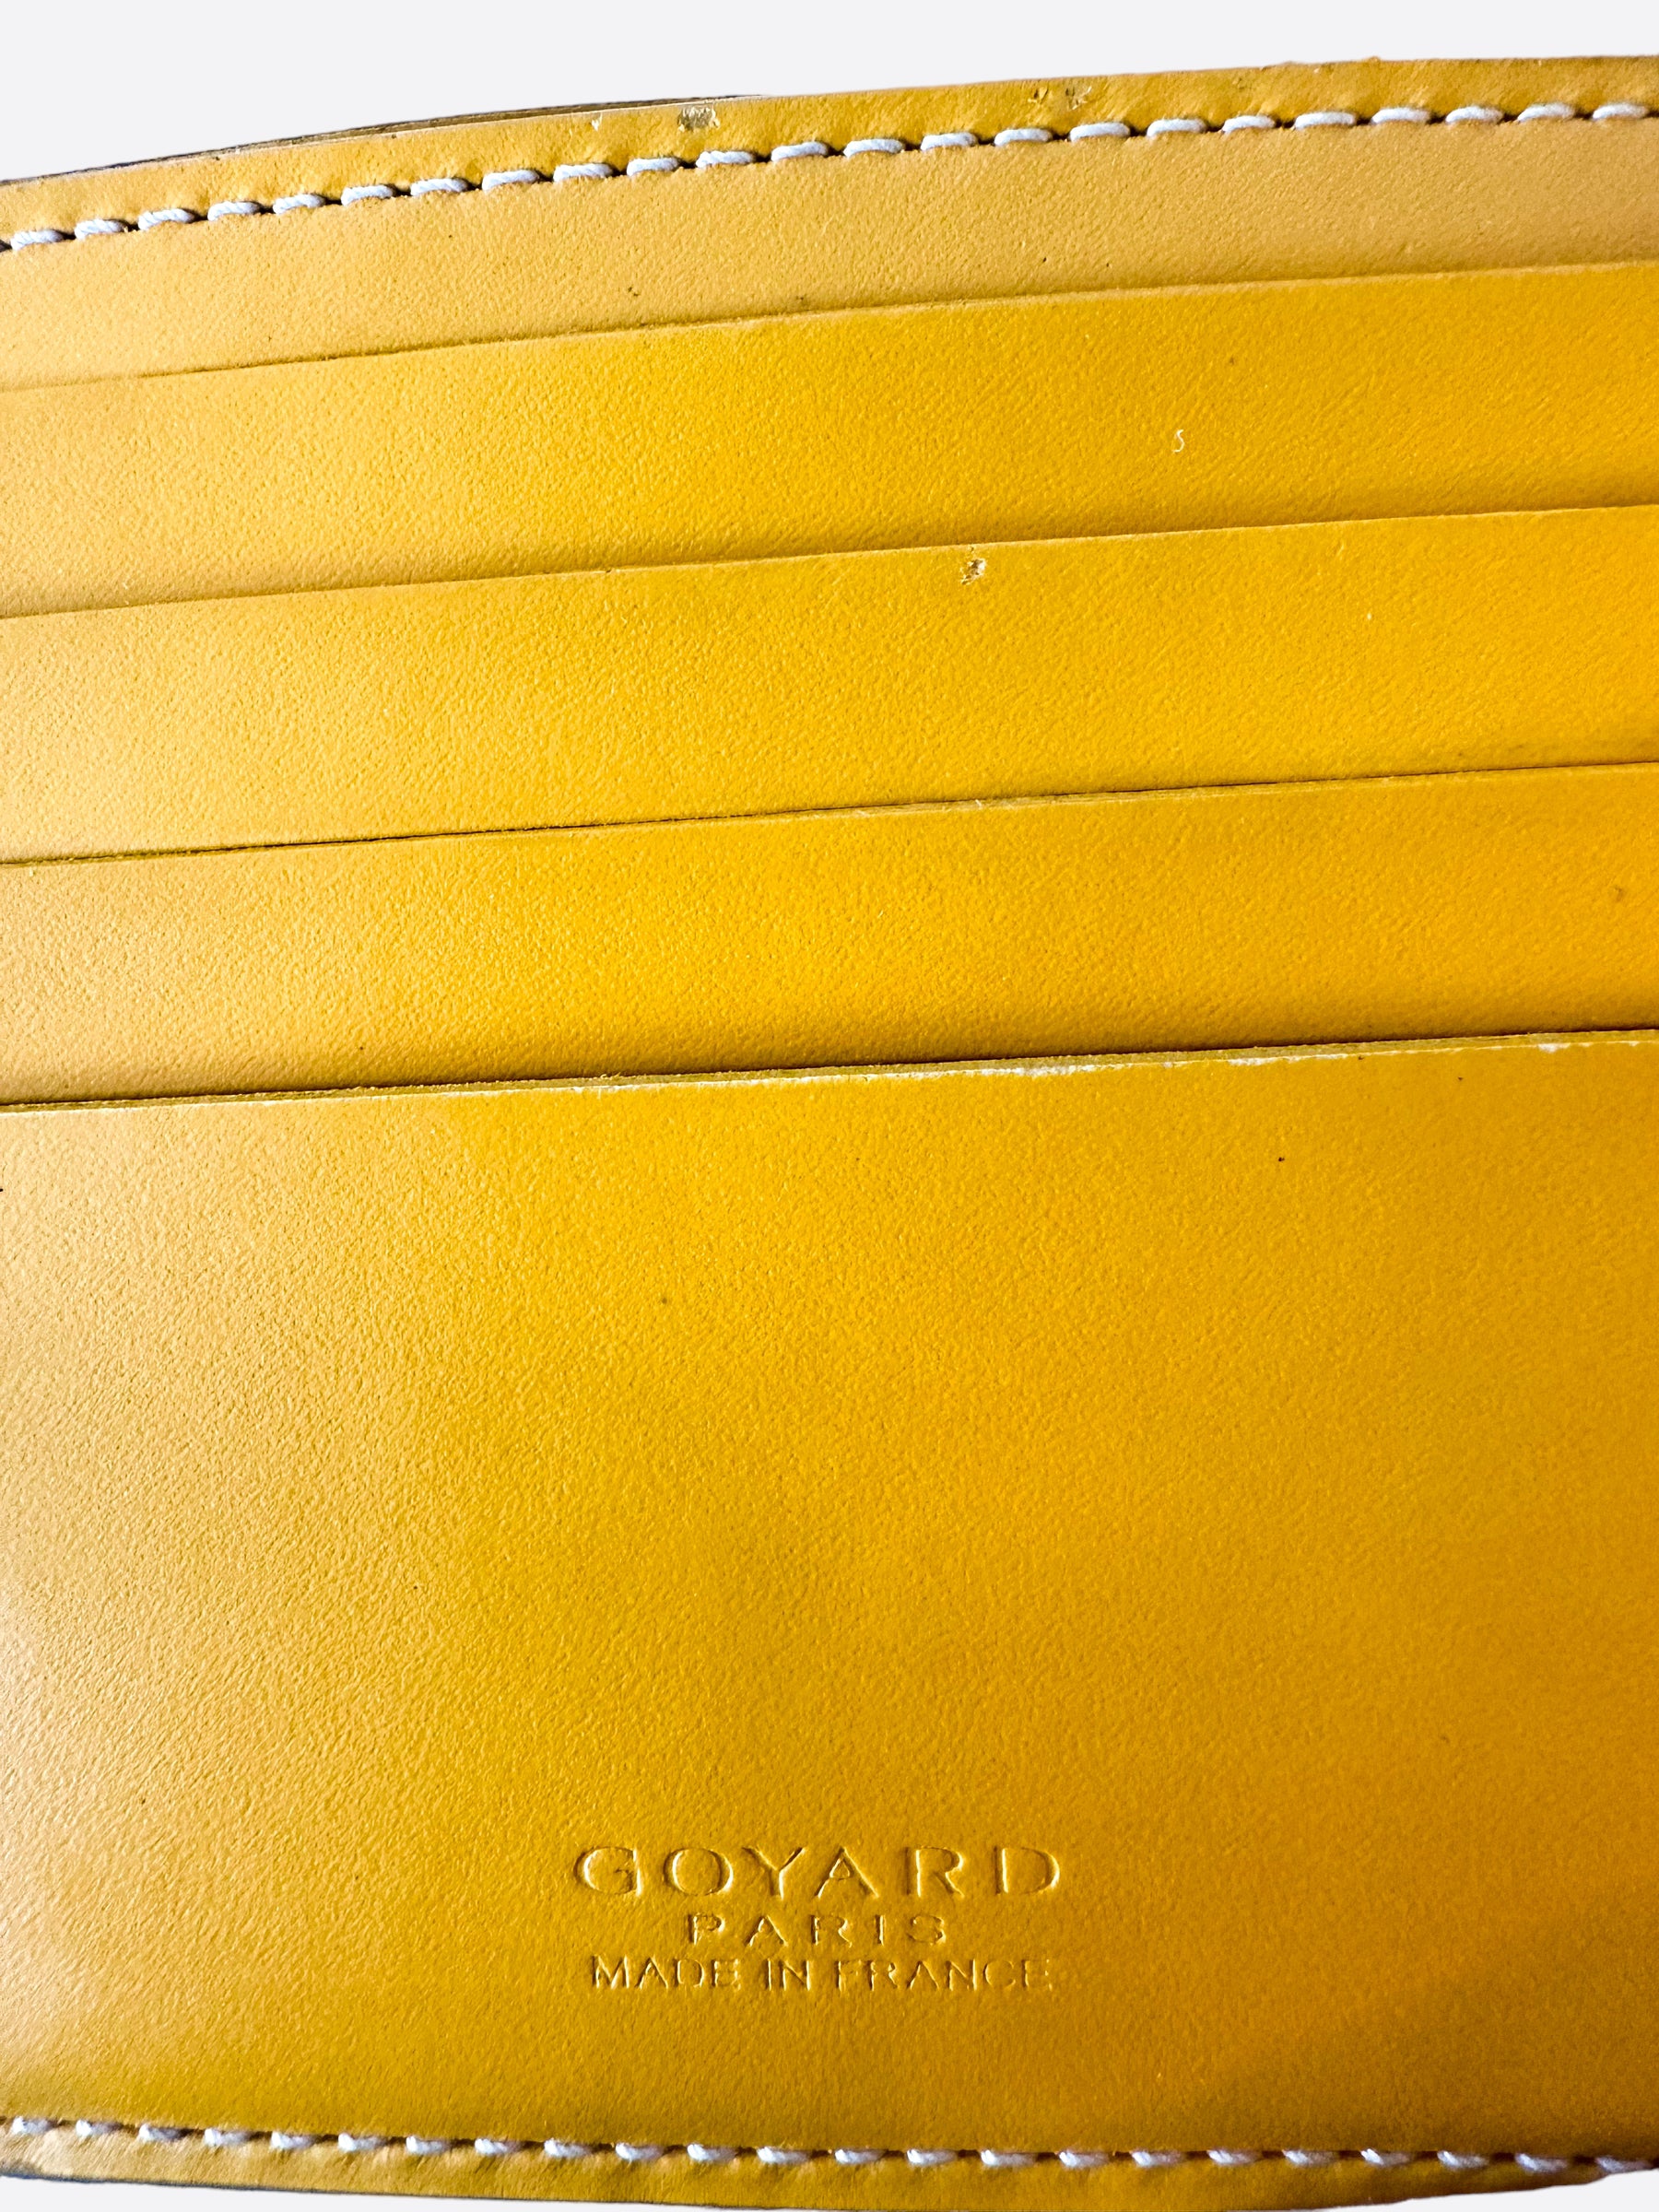 Goyard Men's Wallet - Yellow